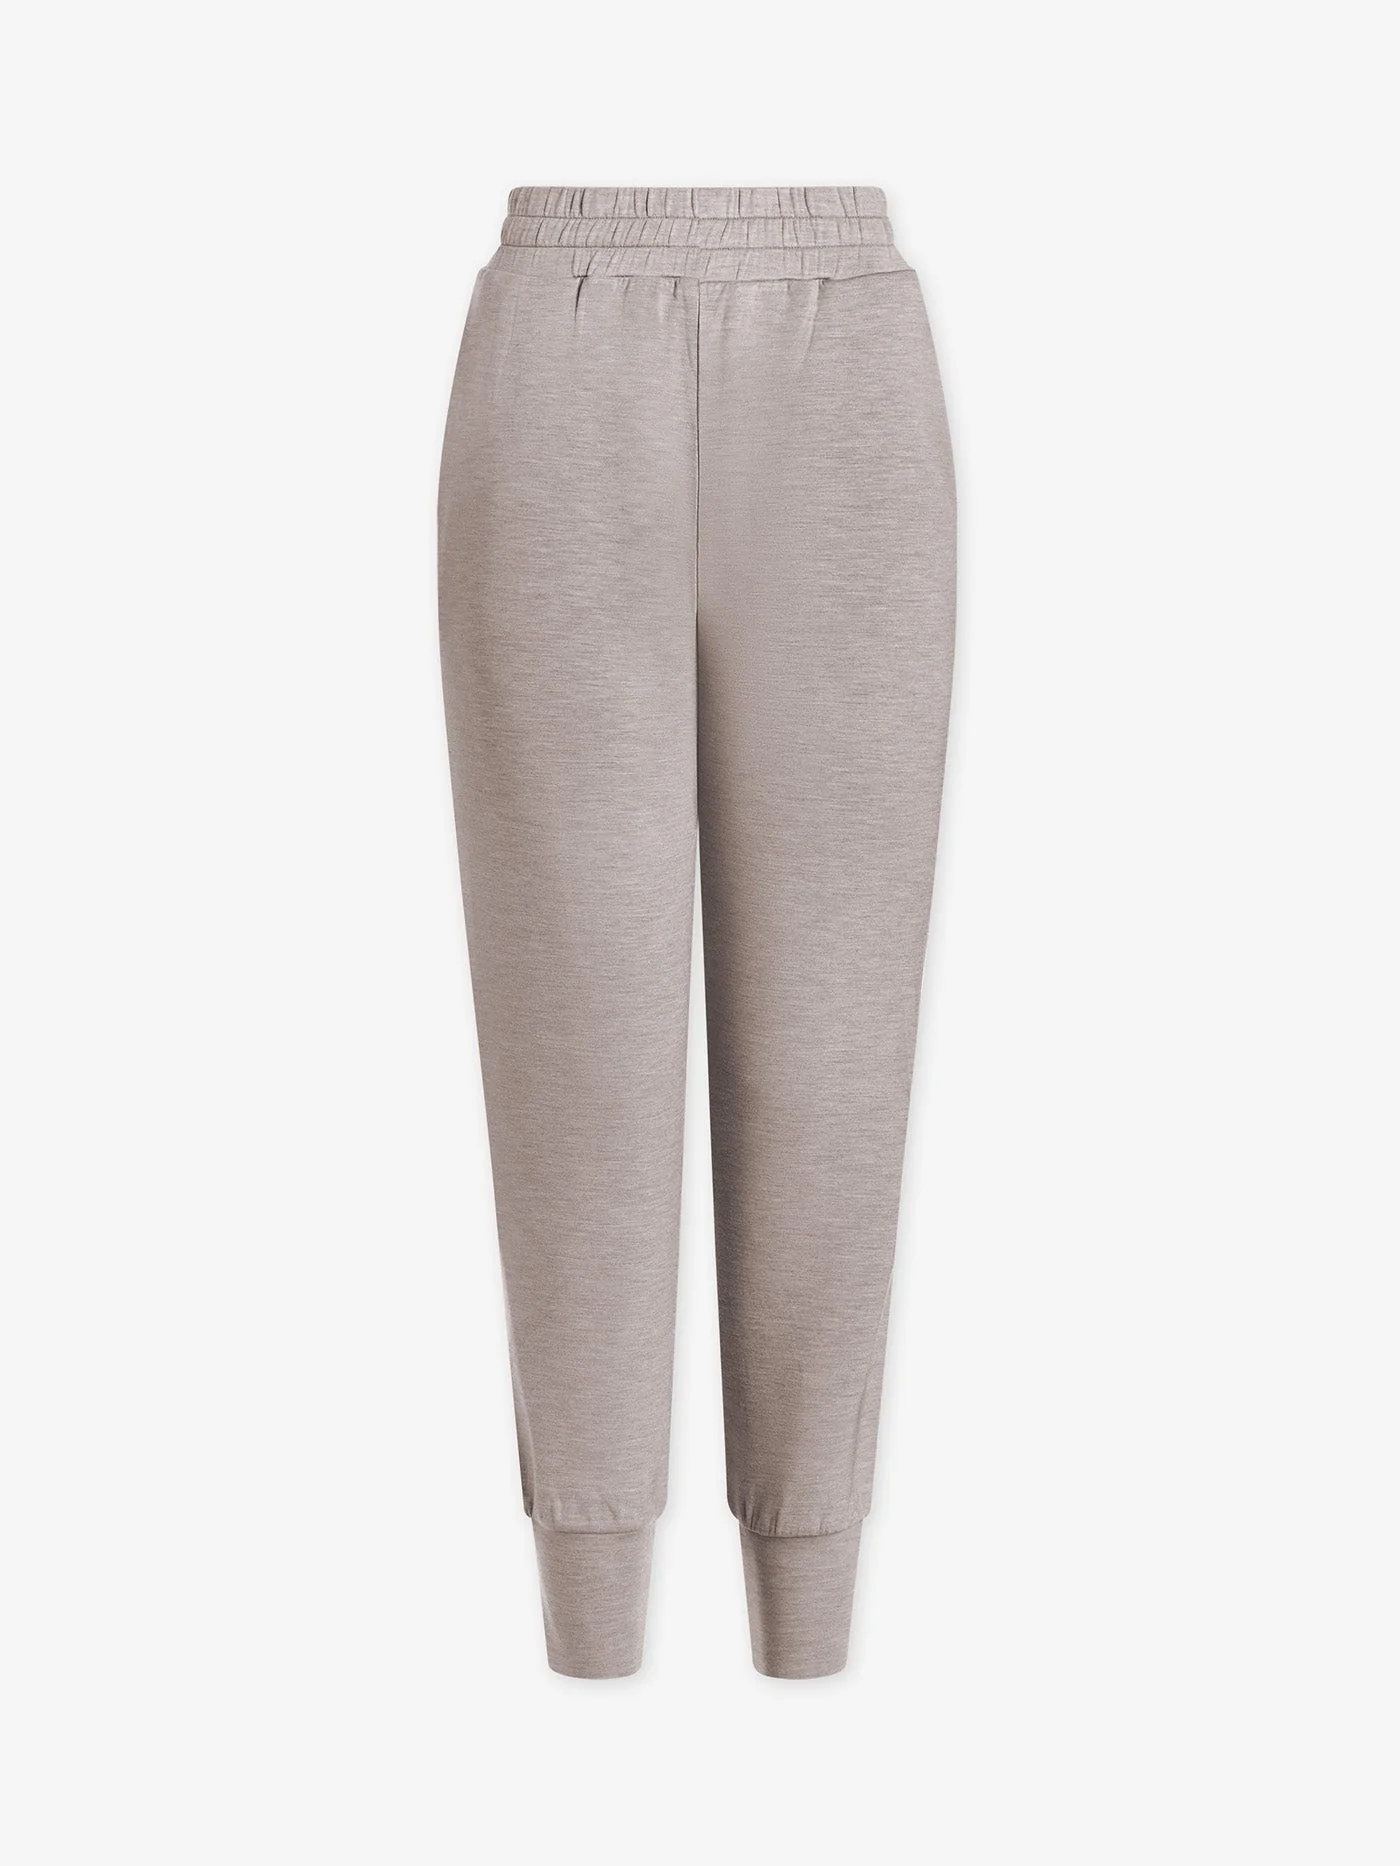 Varley Slim Cuff Pant - Taupe Marl Sleepwear - Other Sleepwear - Loungewear by Varley | Grace the Boutique